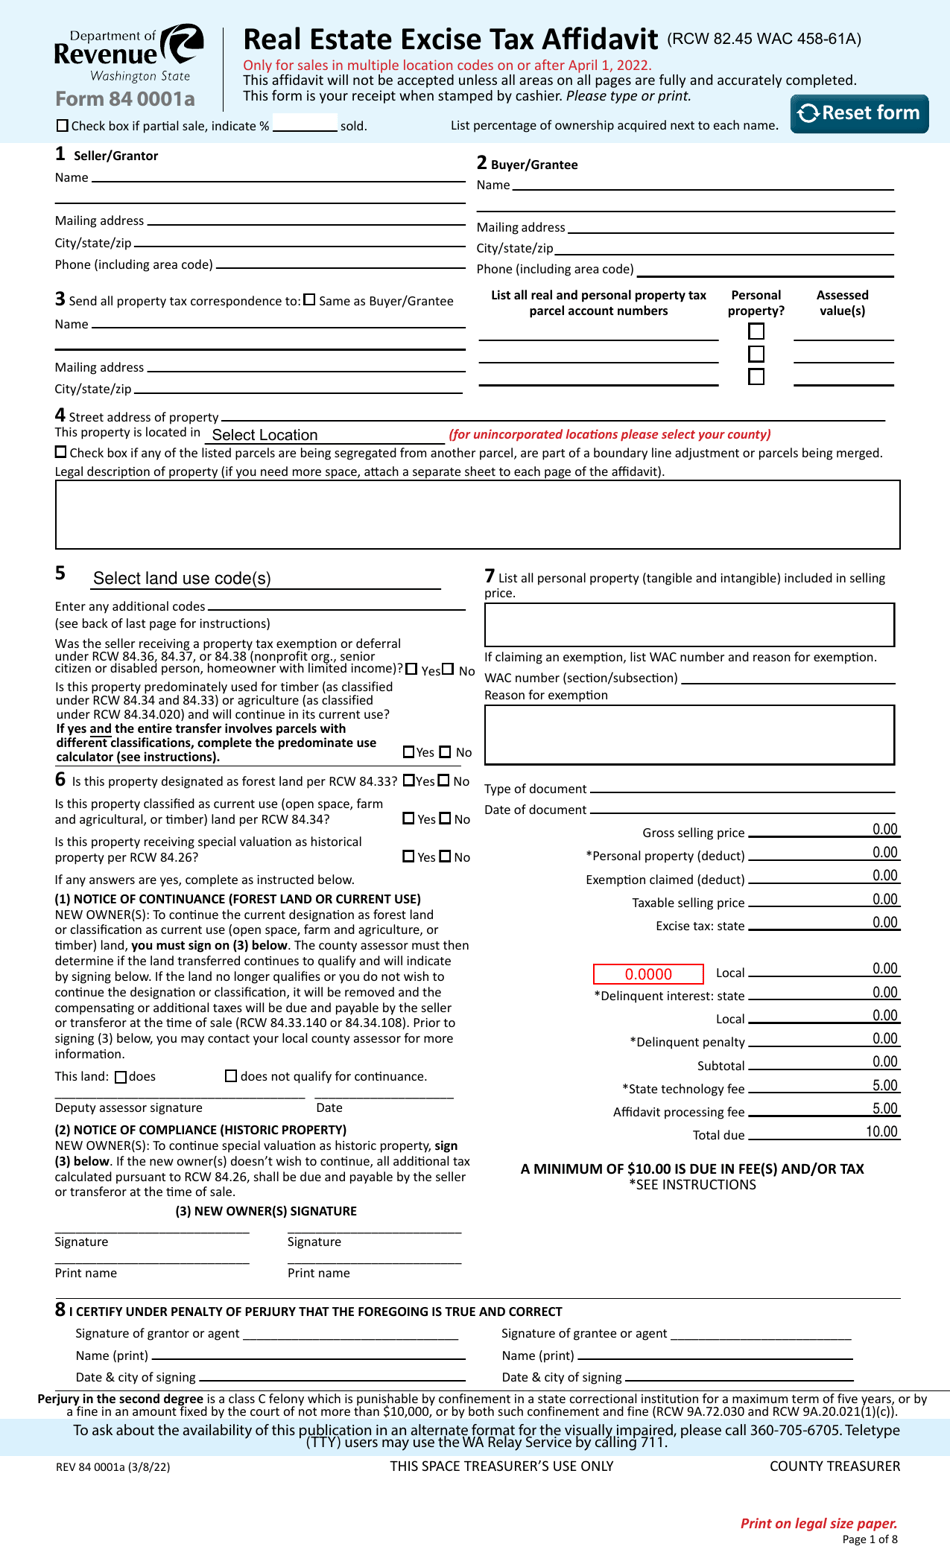 Form REV84 0001A Real Estate Excise Tax Affidavit - Washington, Page 1